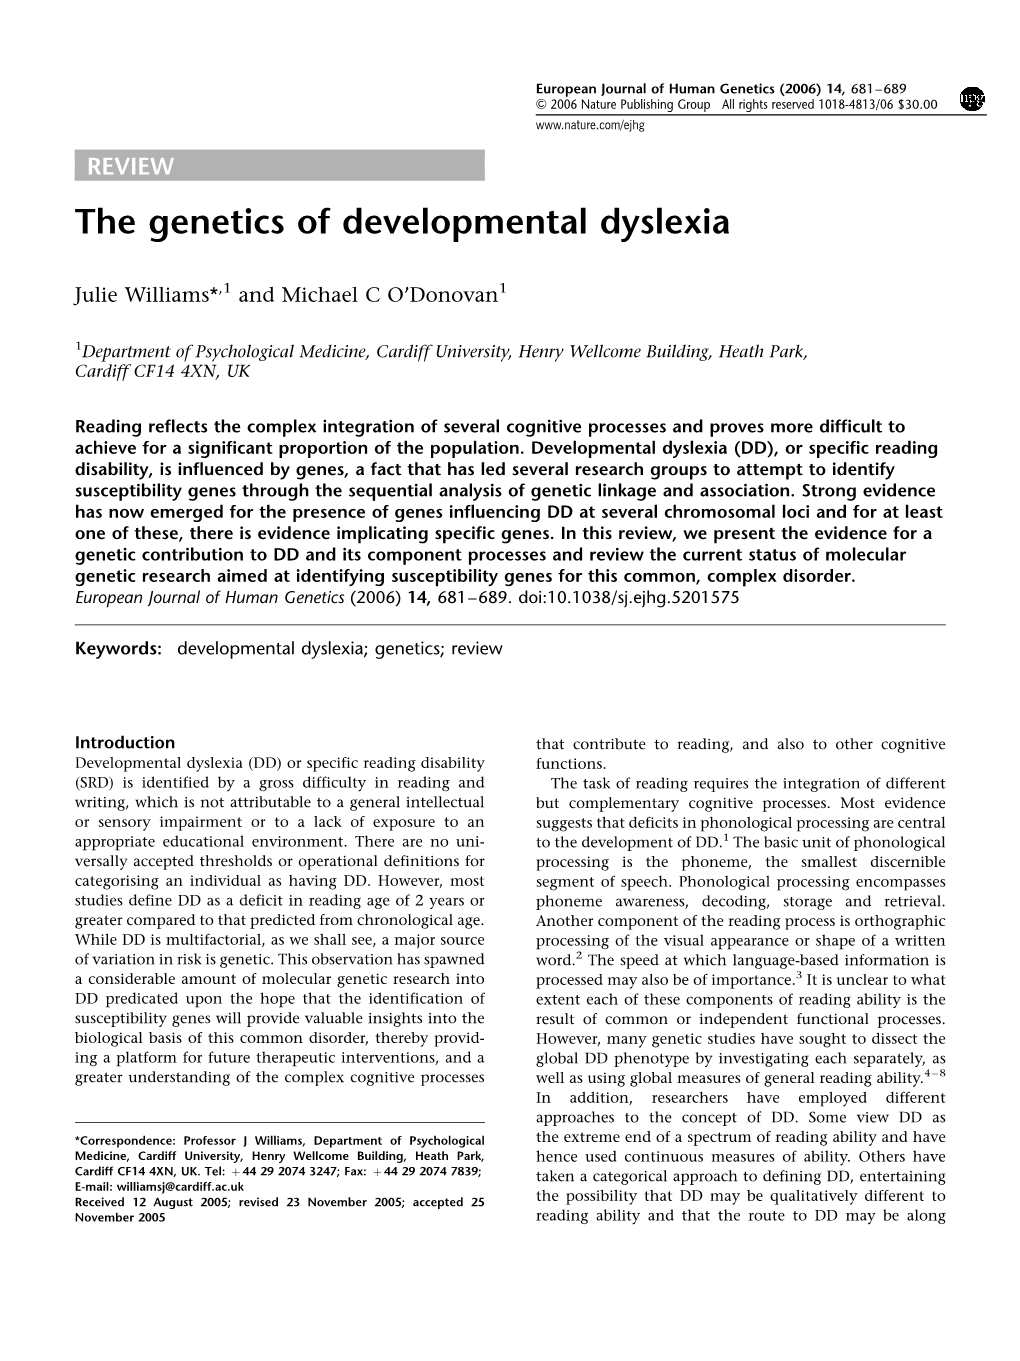 The Genetics of Developmental Dyslexia